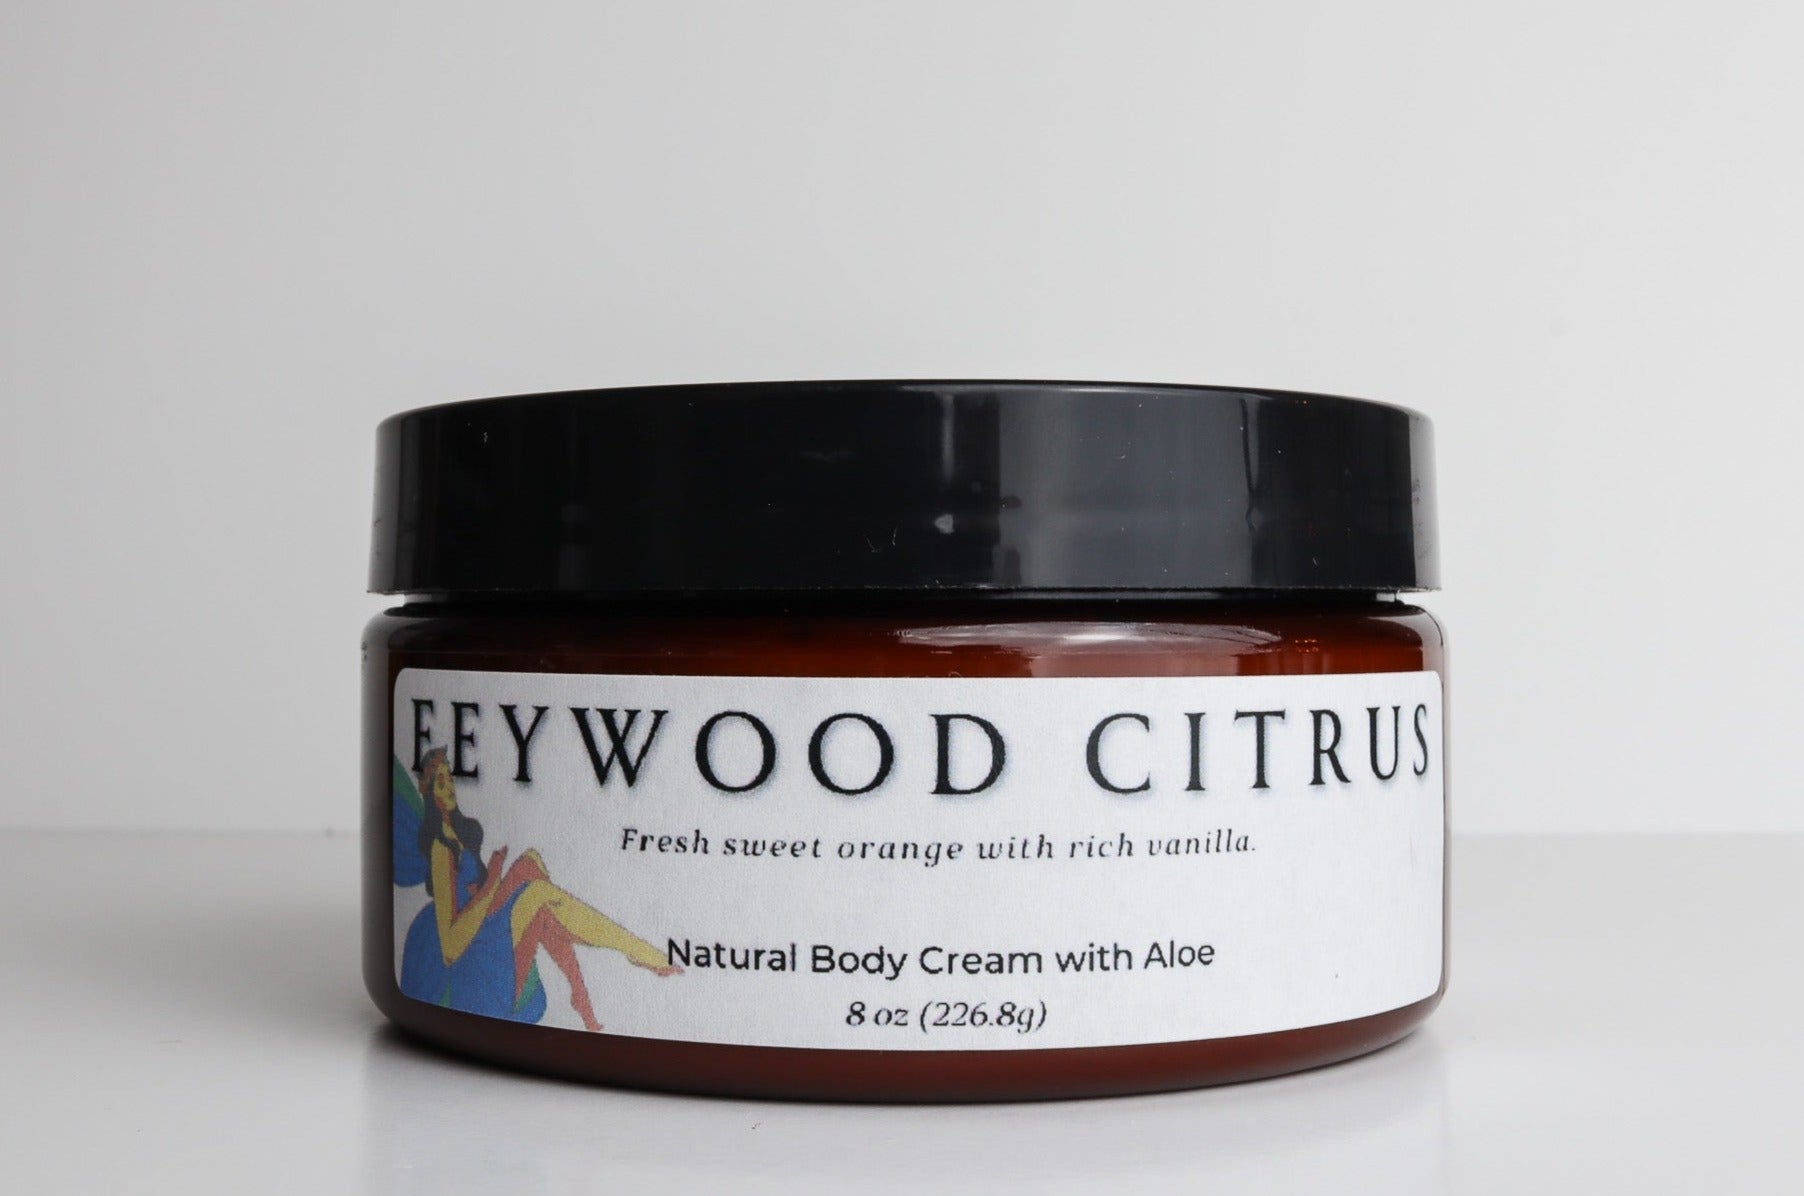 Natural Body Cream with Aloe - Feywood Citrus*